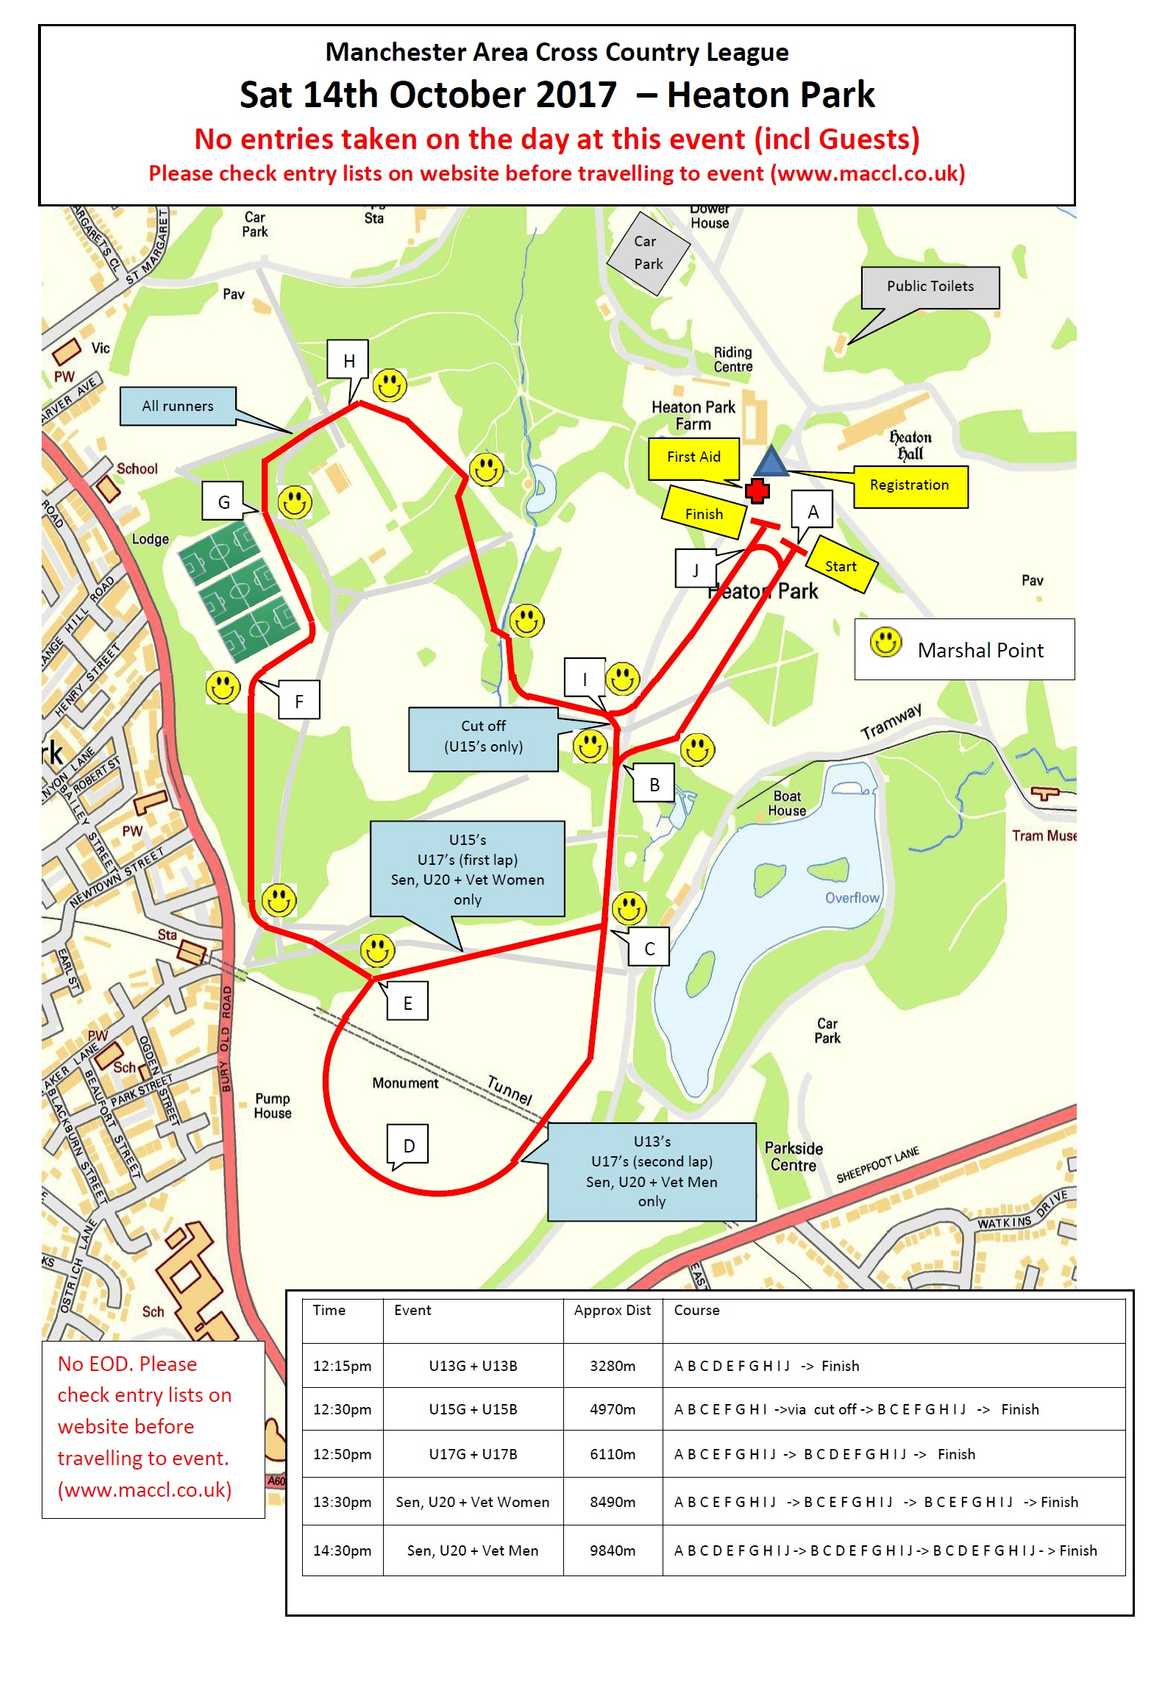 Course map for Manchester Area Cross Country League Heaton Park fixture